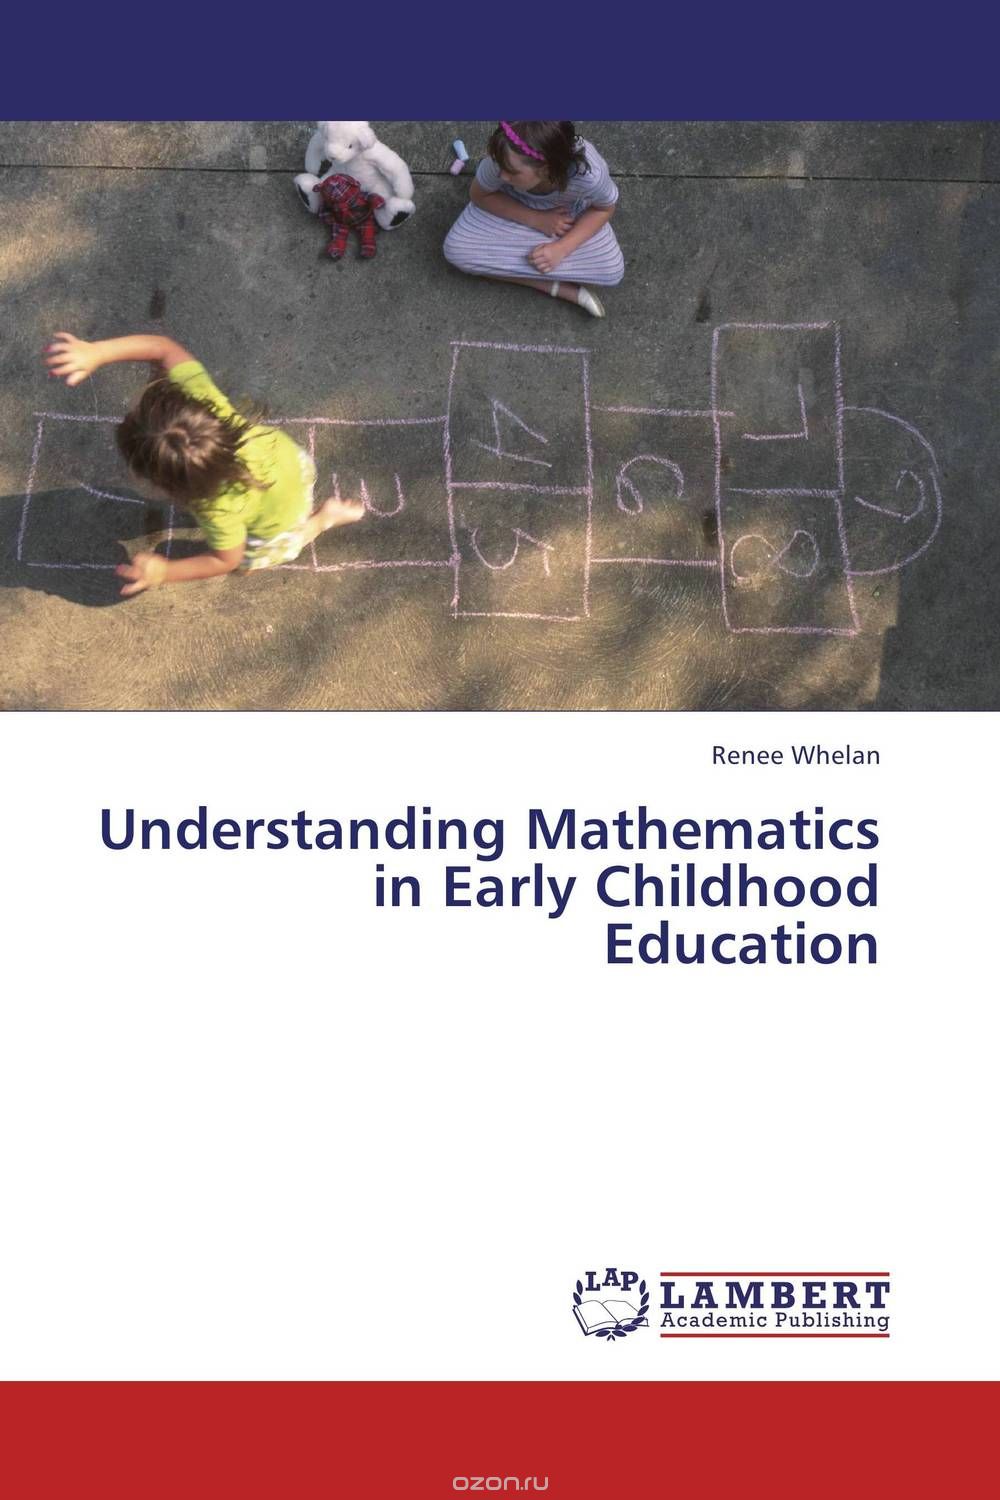 Скачать книгу "Understanding Mathematics in Early Childhood Education"